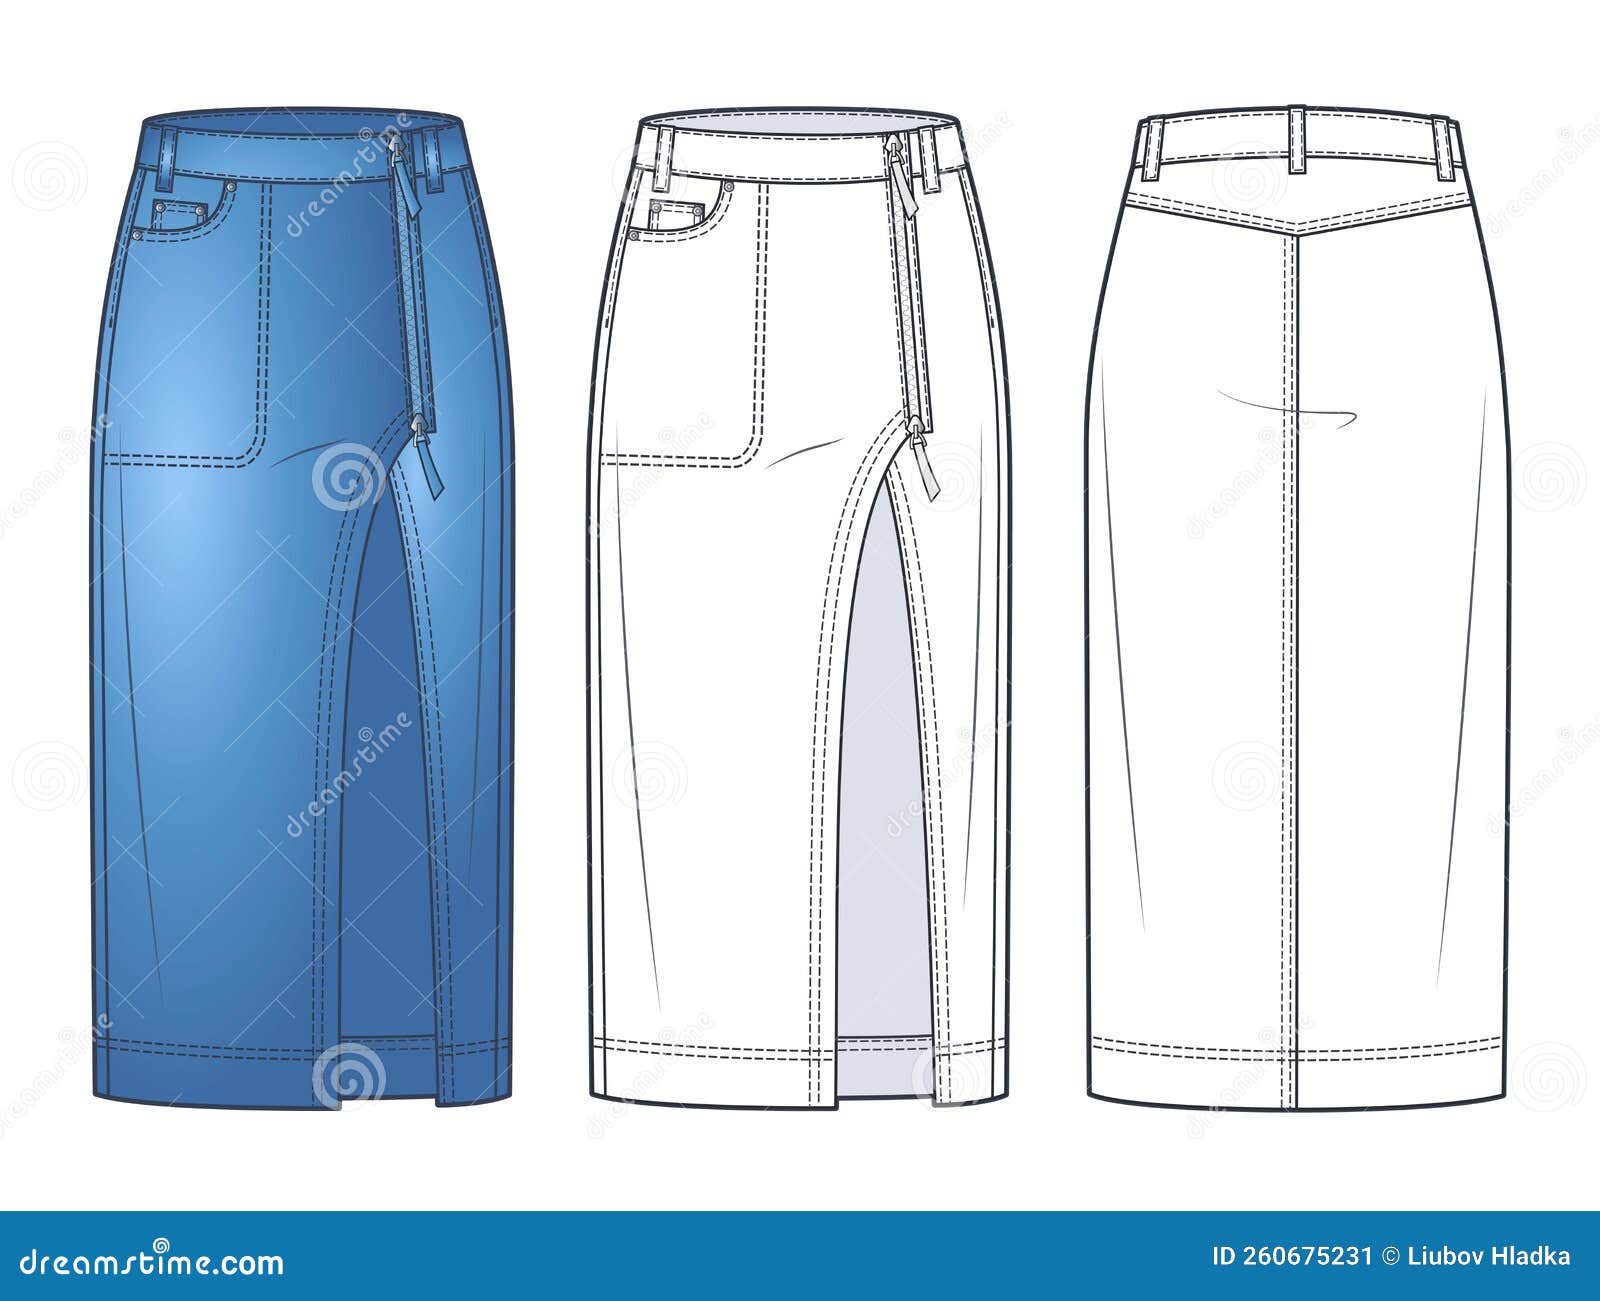 Asymmetric Denim Skirt Technical Fashion Illustration, Blue Design ...